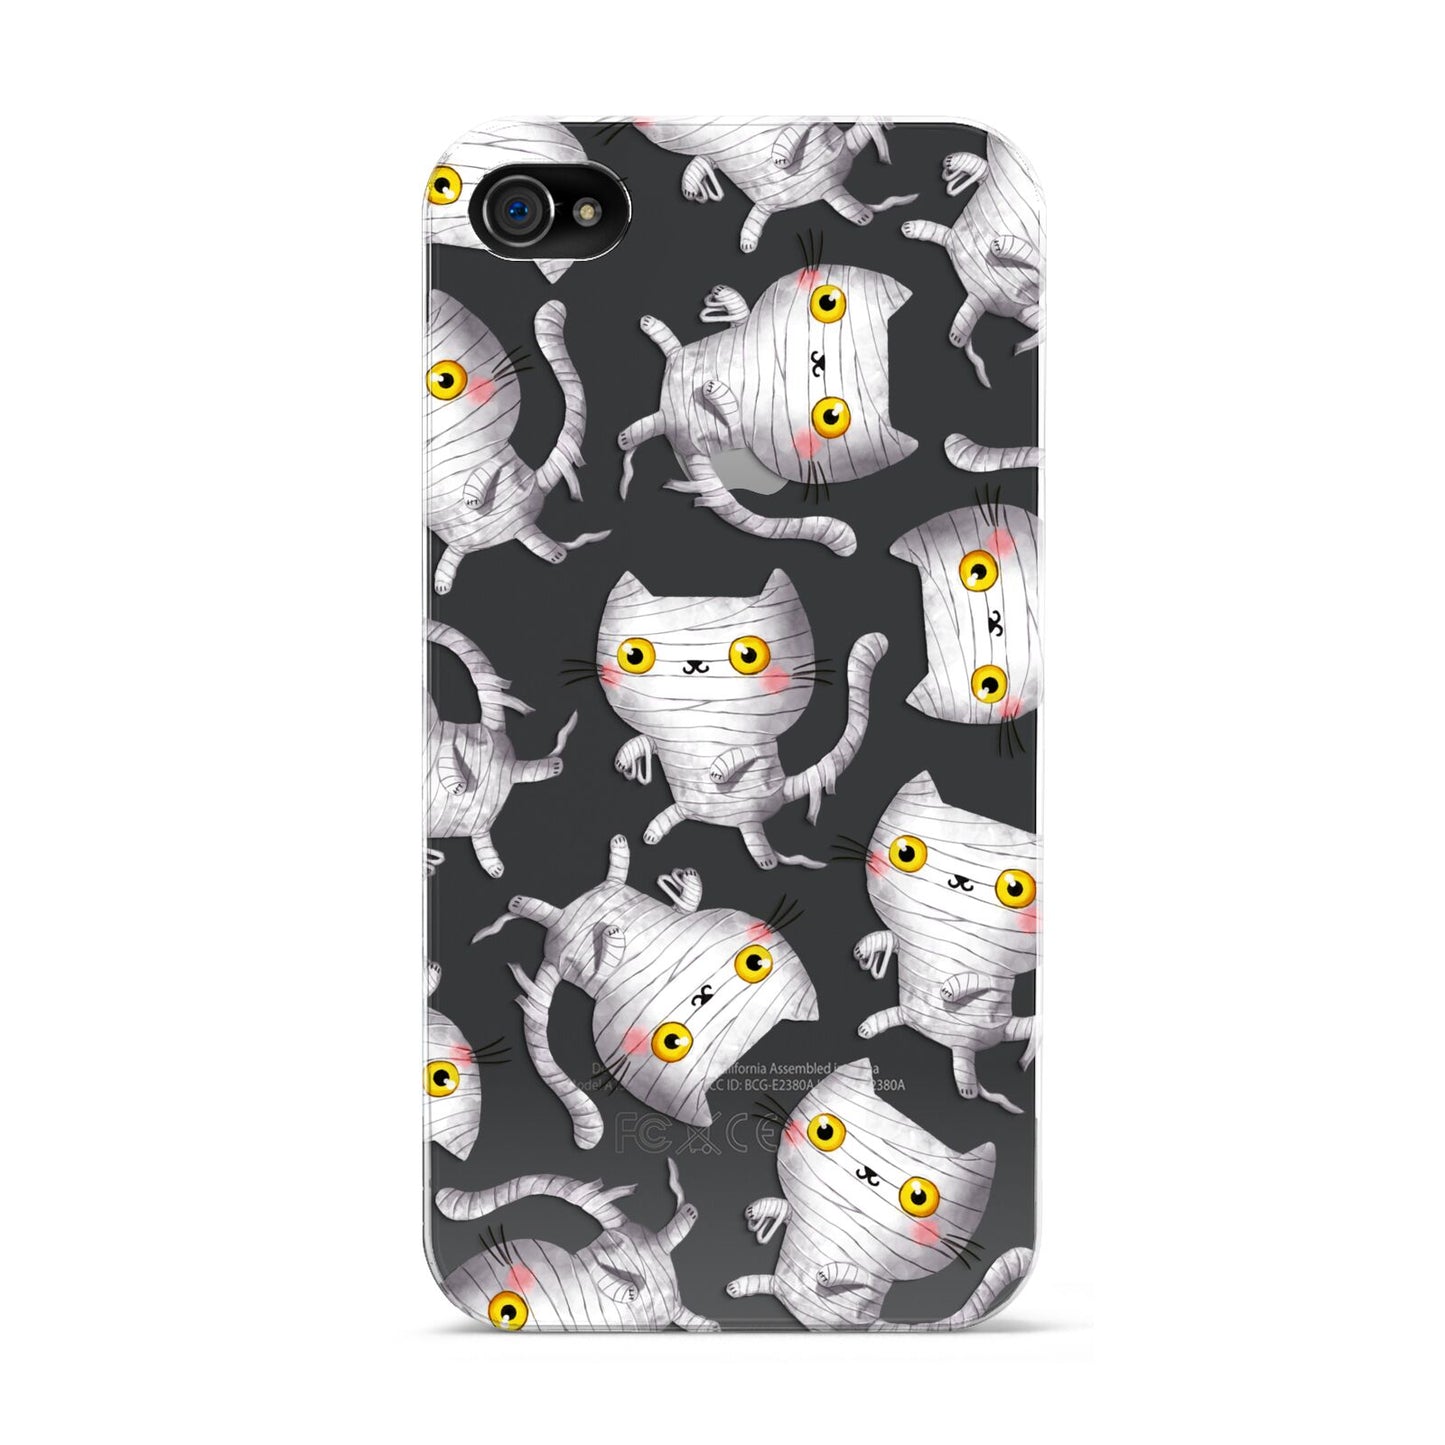 Mummy Cats Apple iPhone 4s Case